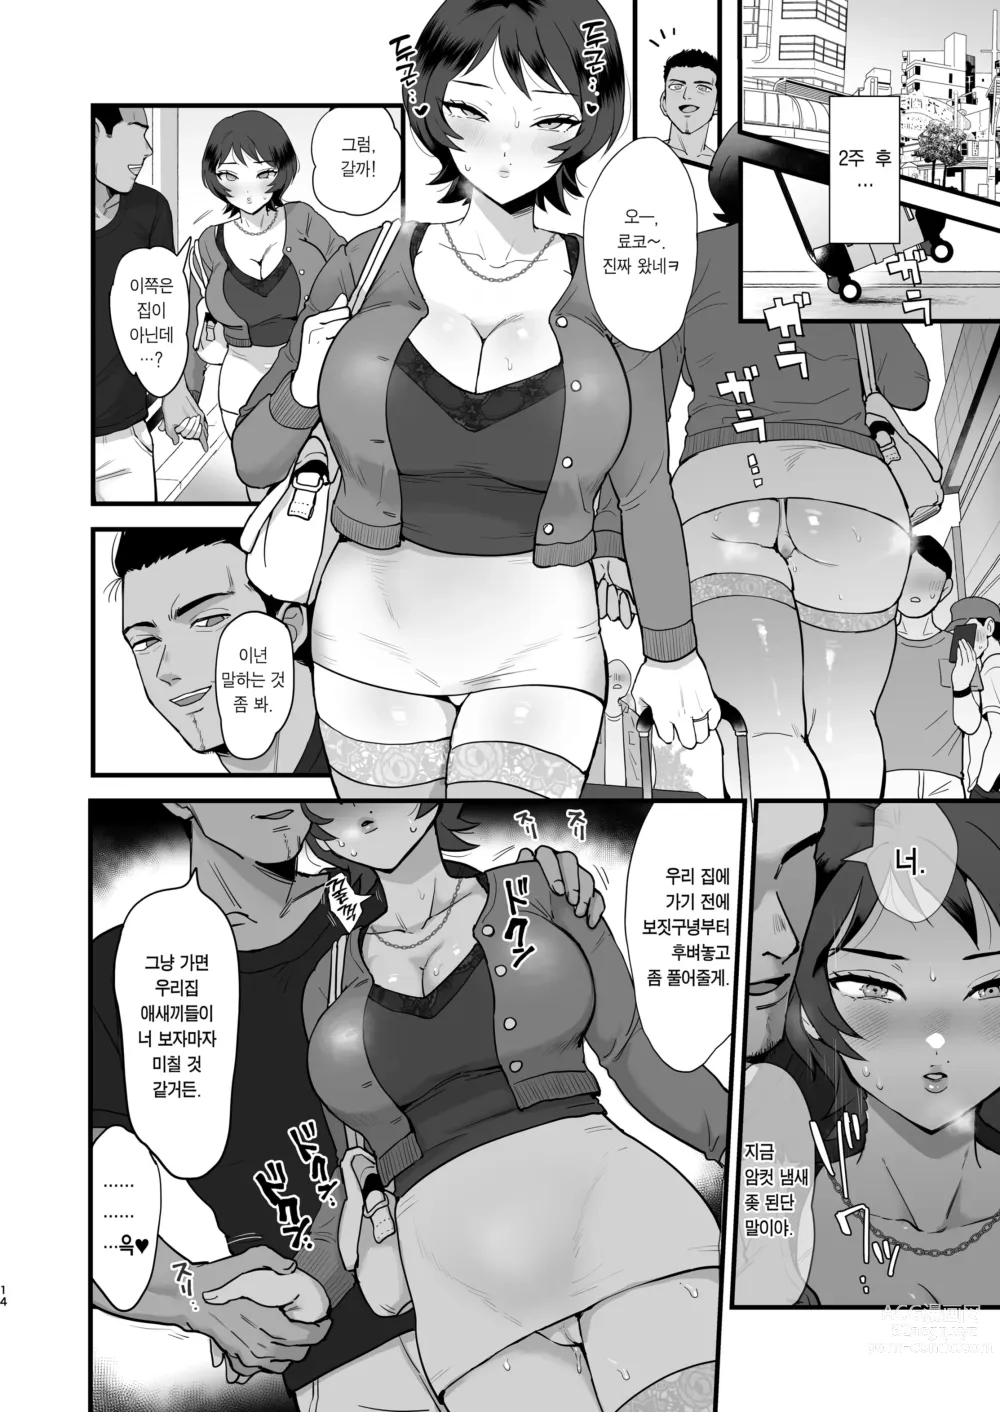 Page 13 of doujinshi 옛 동창인 섹프 격한 걸 좋아하는 료코 씨.